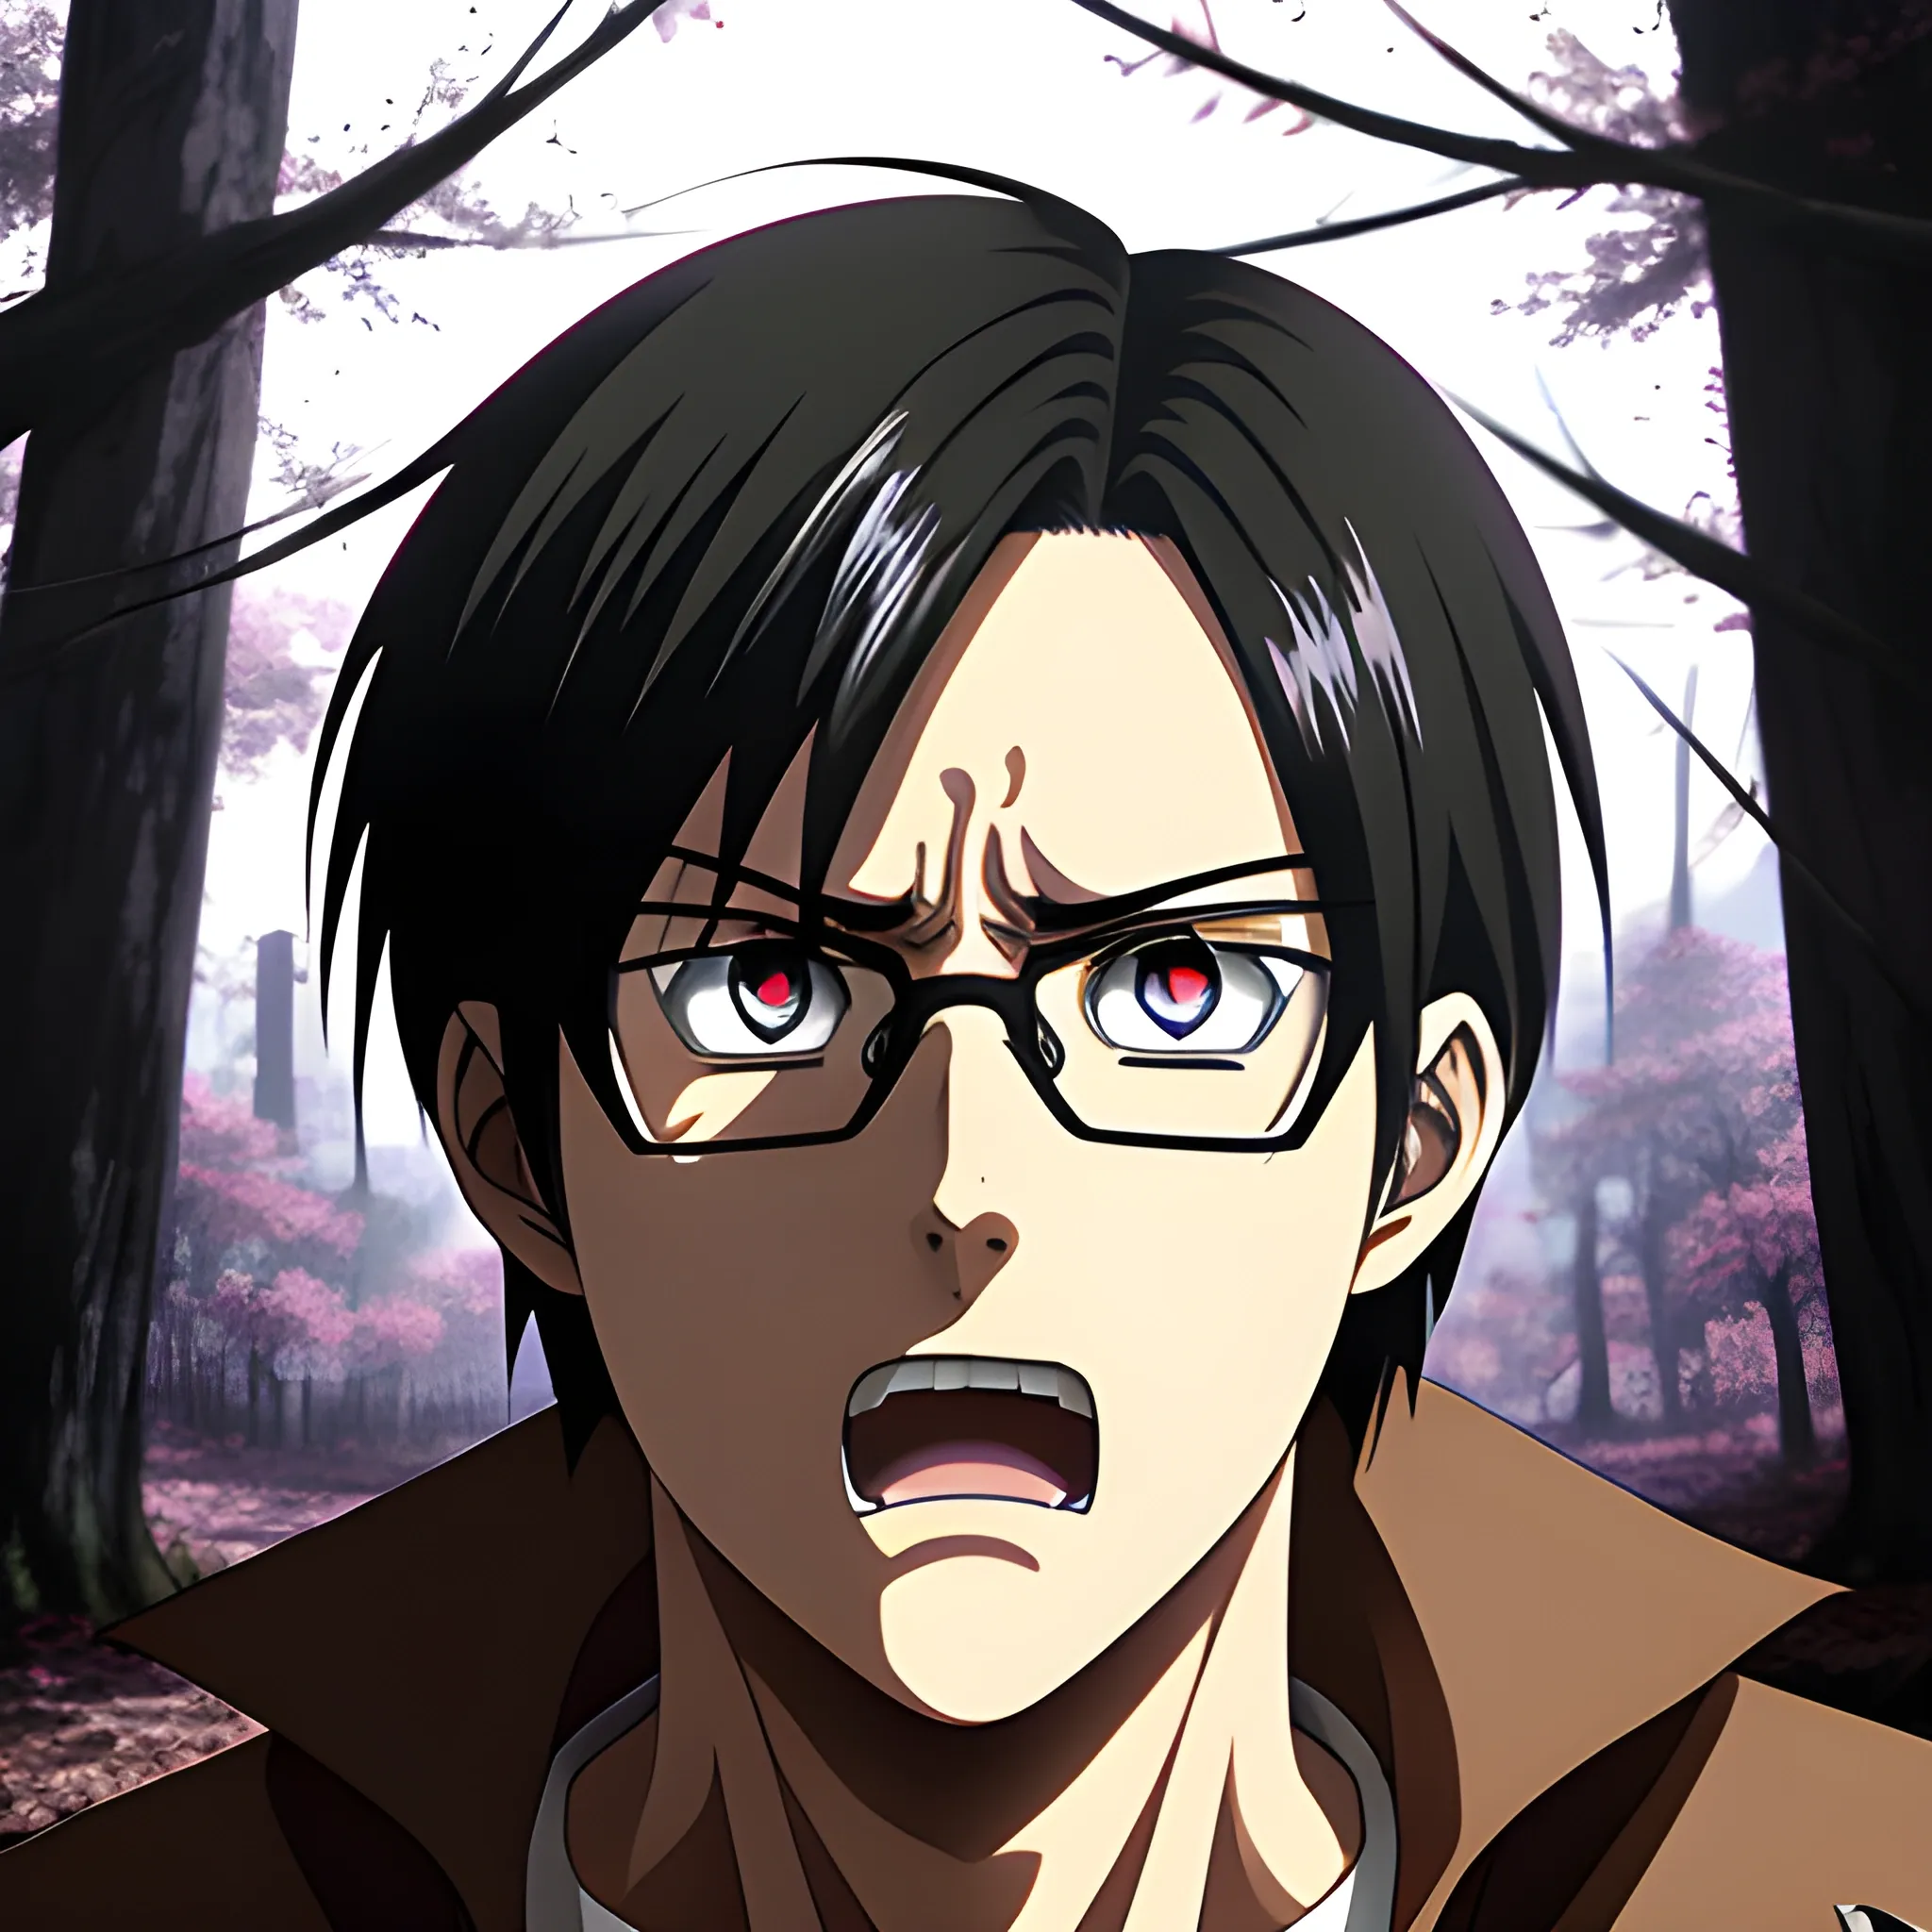 Anime man attack on titan, eren, purple eyes, glasses black, forest background, hyper deformed, 4k.